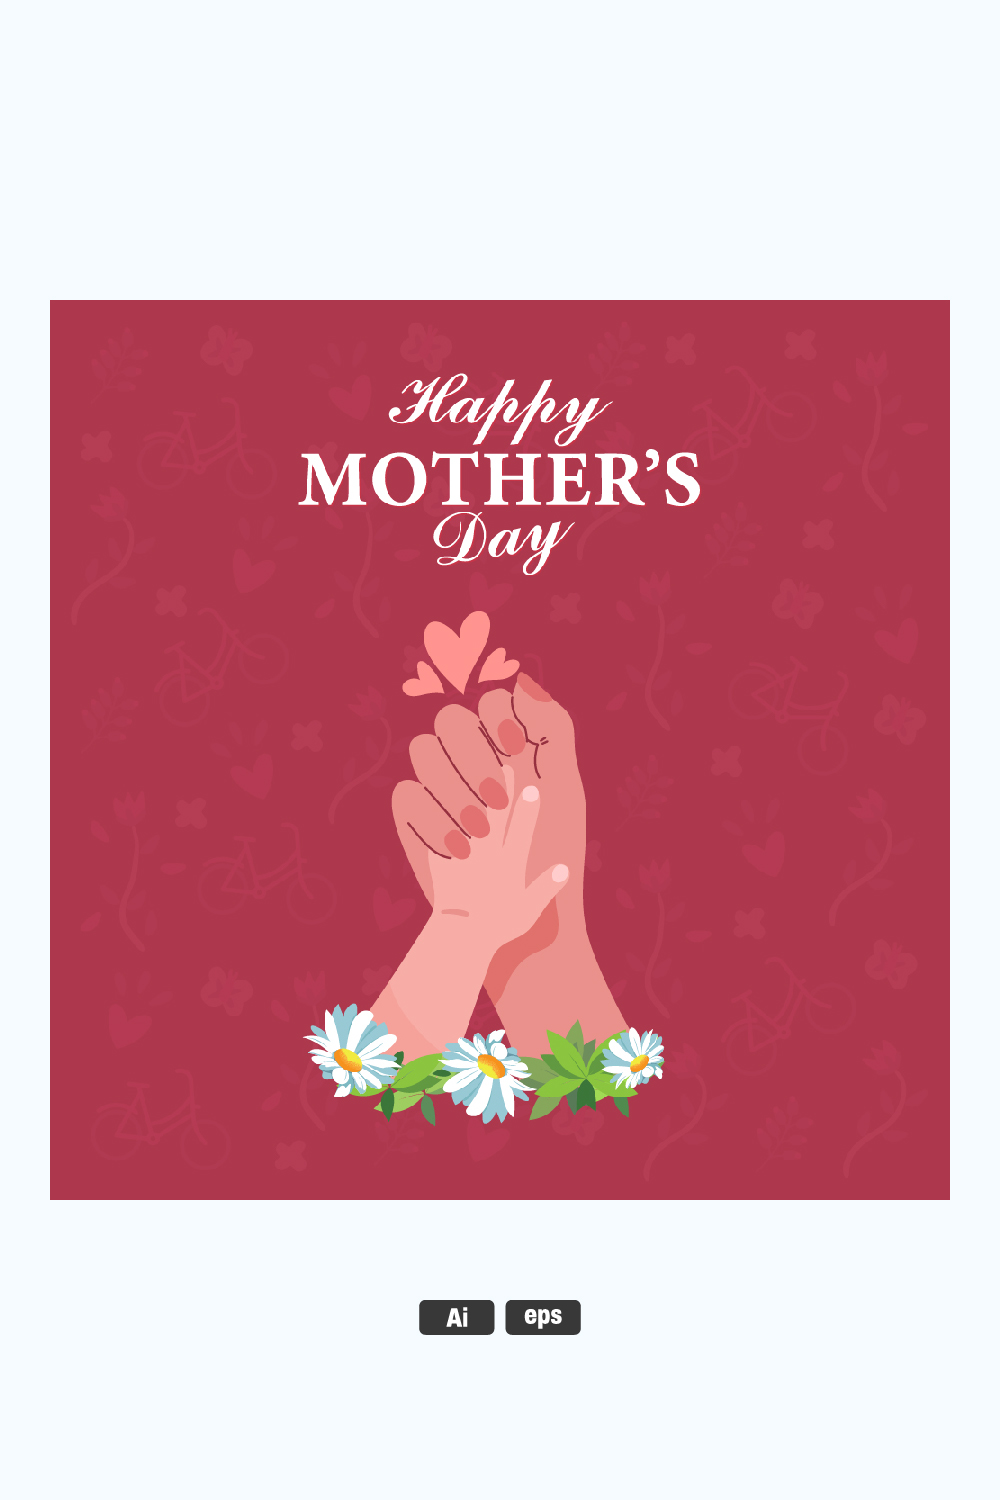 Mother's Days social media banner pinterest preview image.